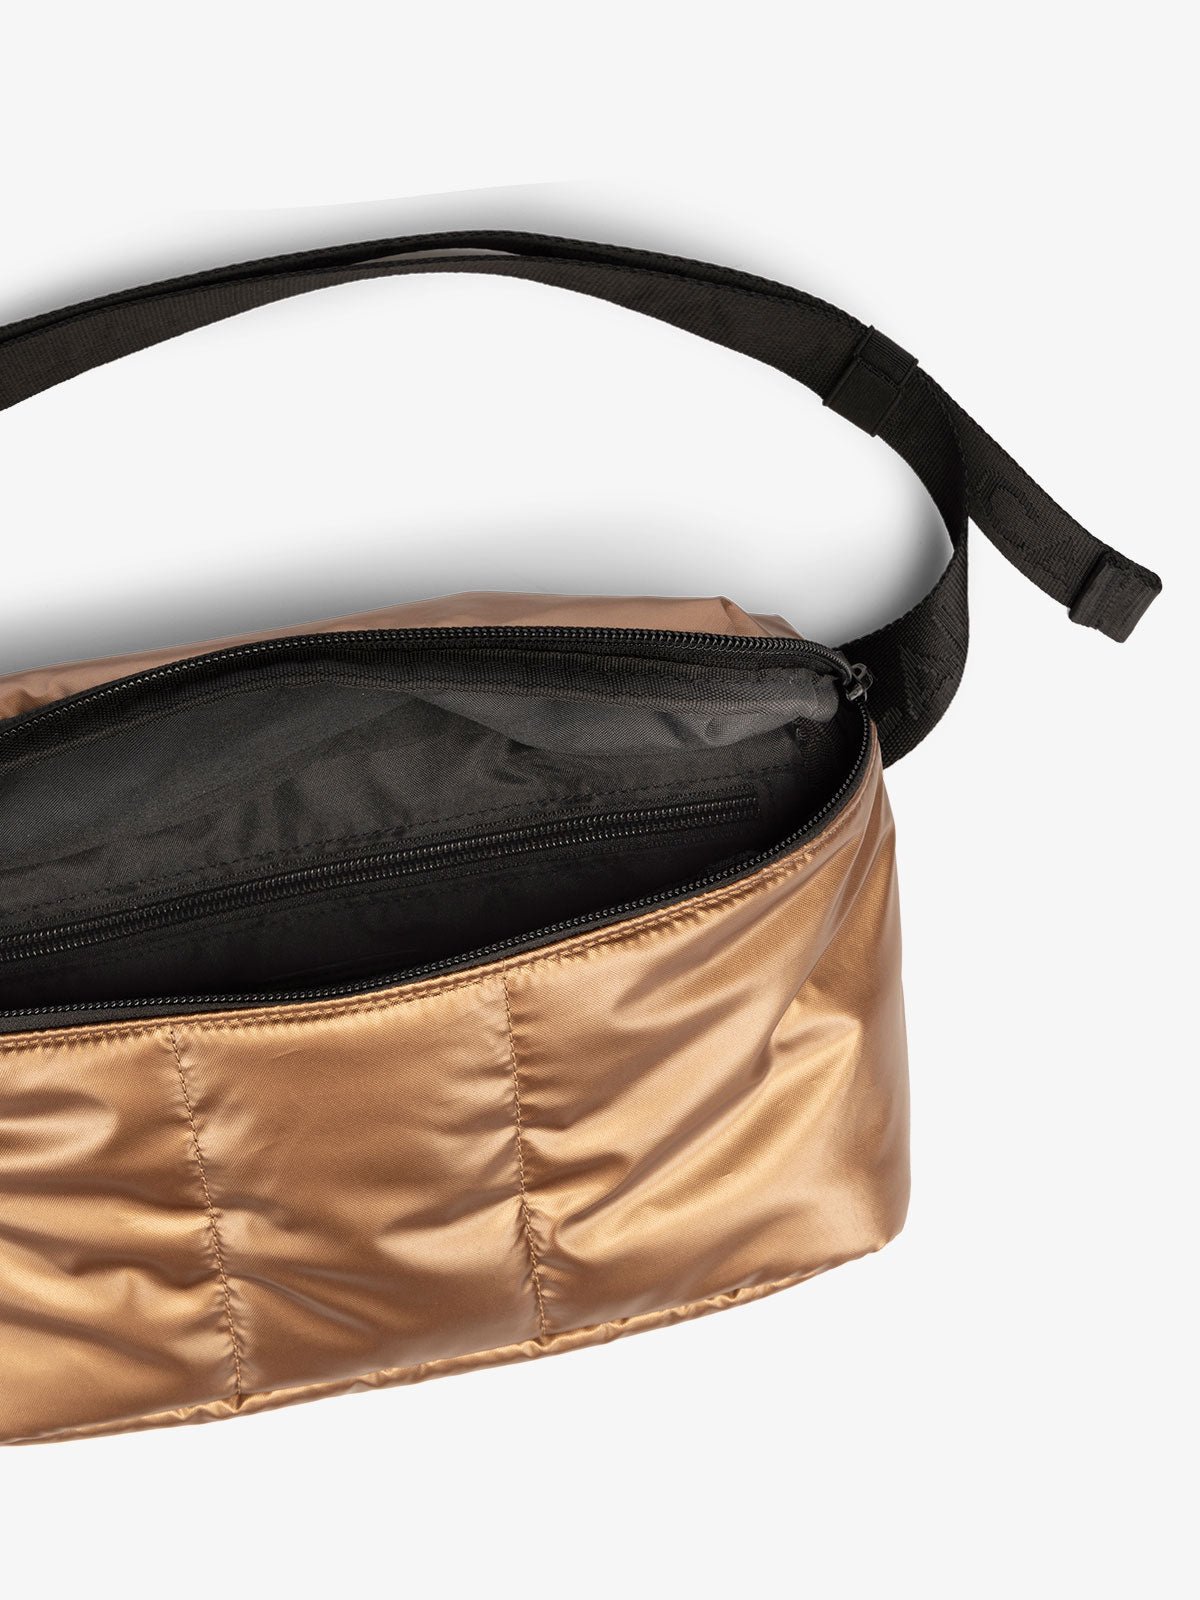 CALPAK Luka Belt Bag close up interior and strap in metallic copper